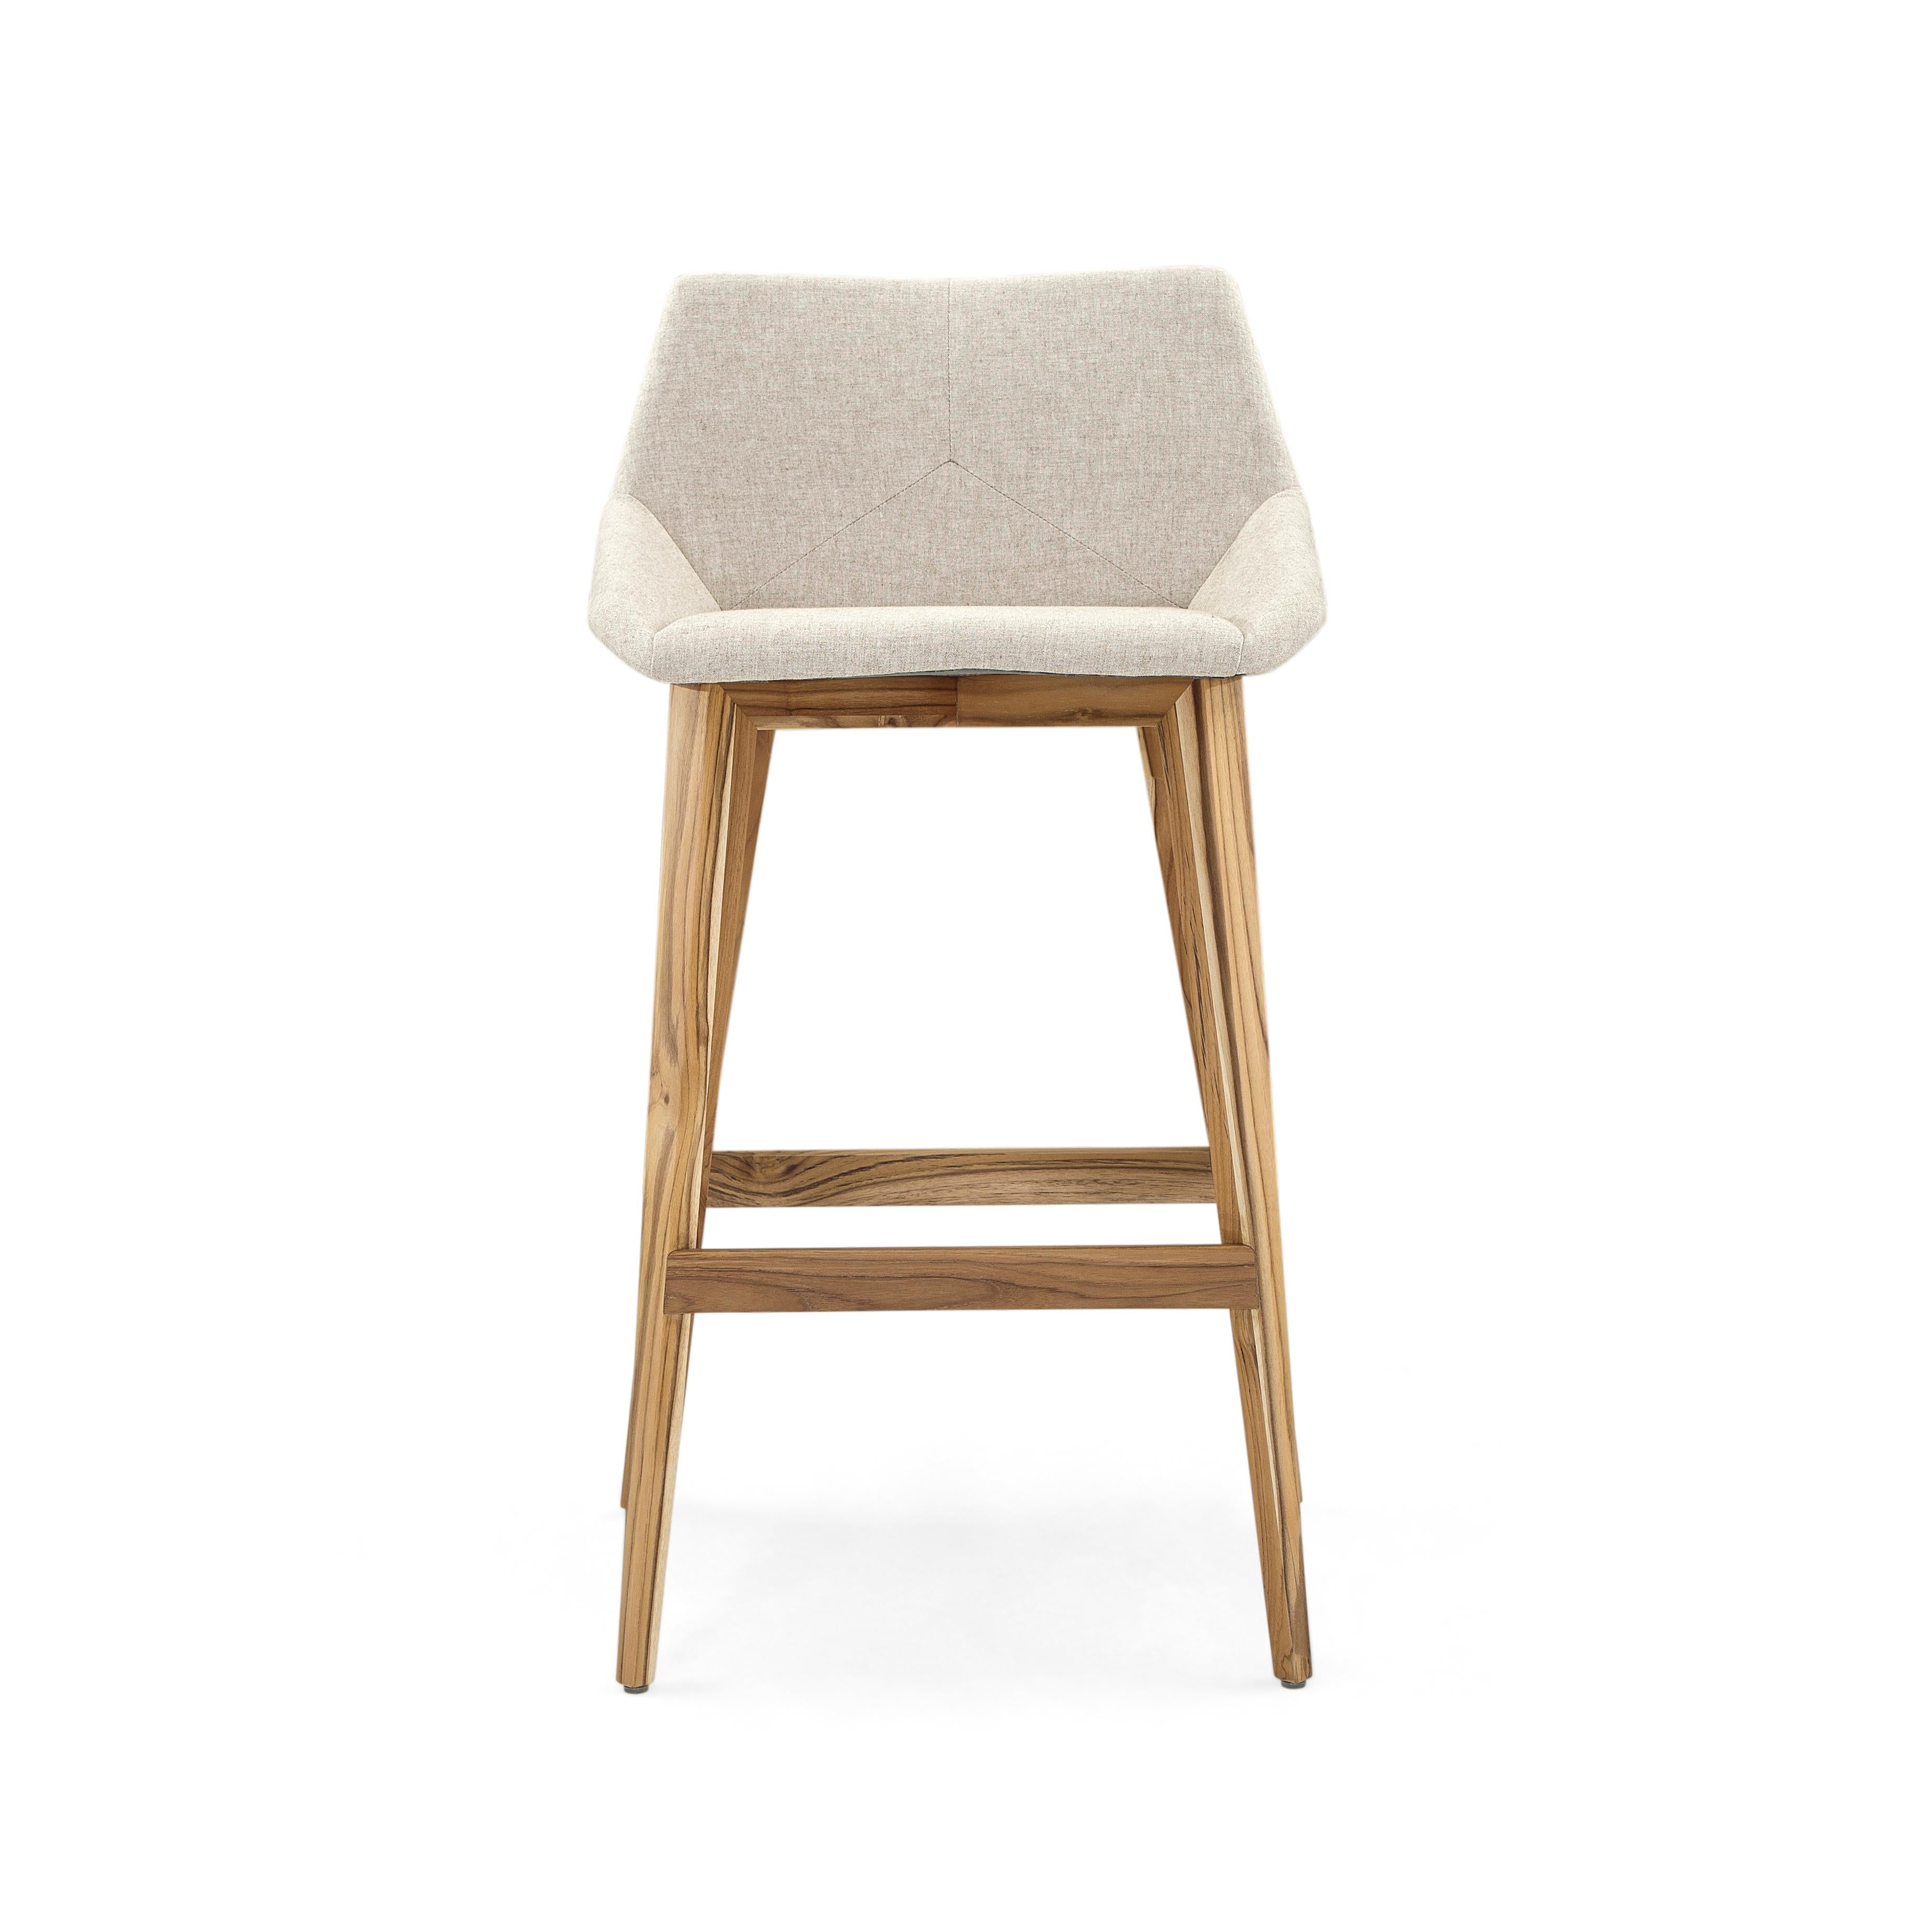 Brazilian Geometric Cubi Bar Stool with Teak Wood Finish Base and Oatmeal Fabric Seat For Sale